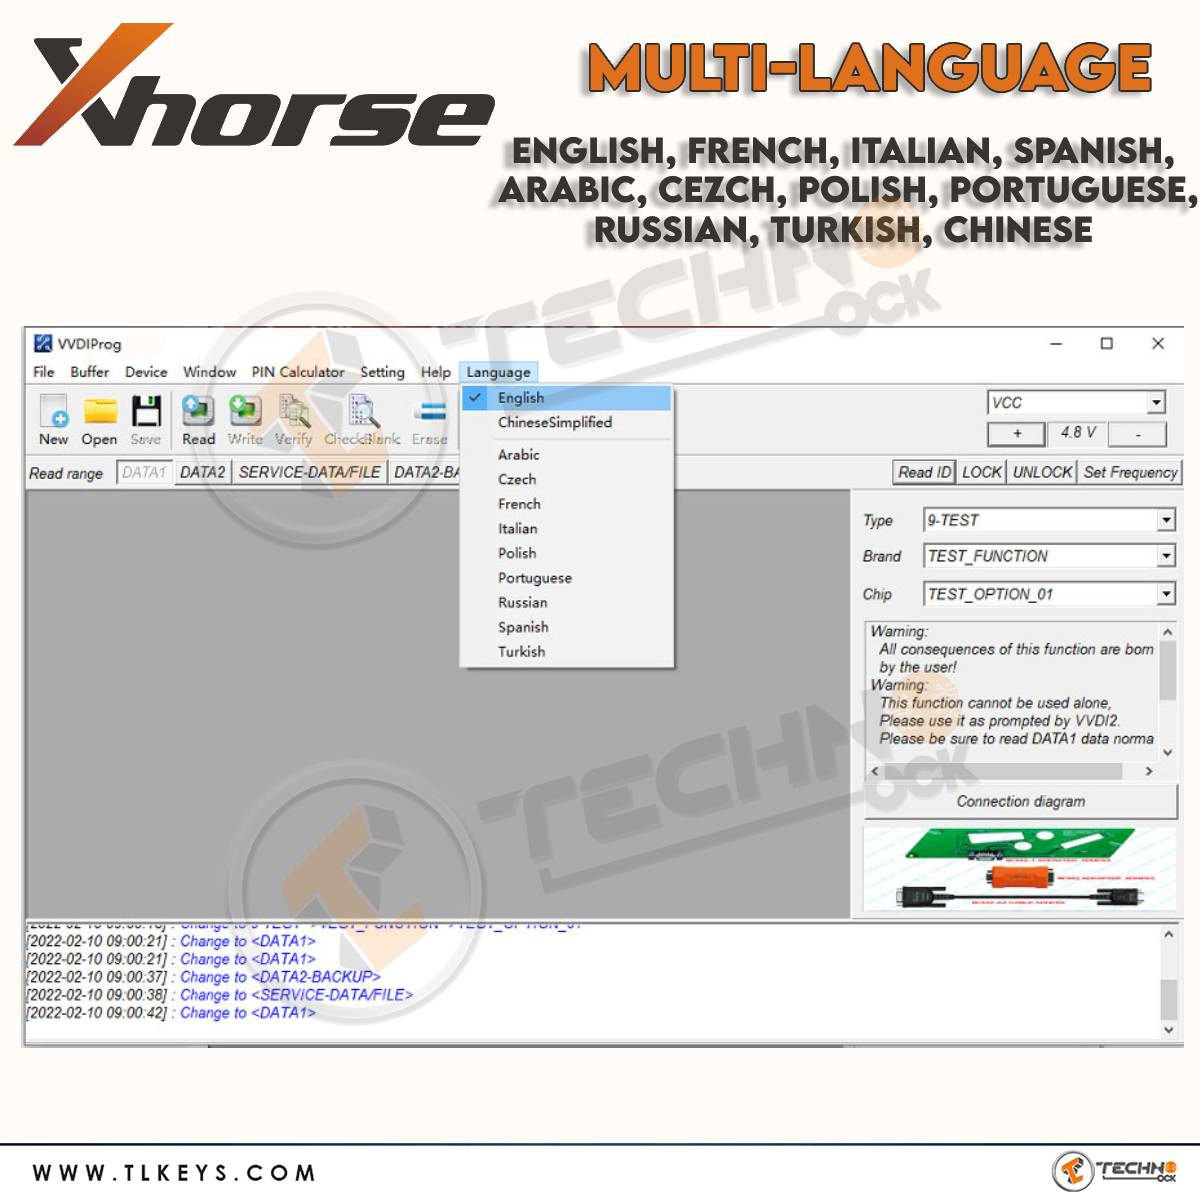  Xhorse VVDI PROG Support Multi-Languages